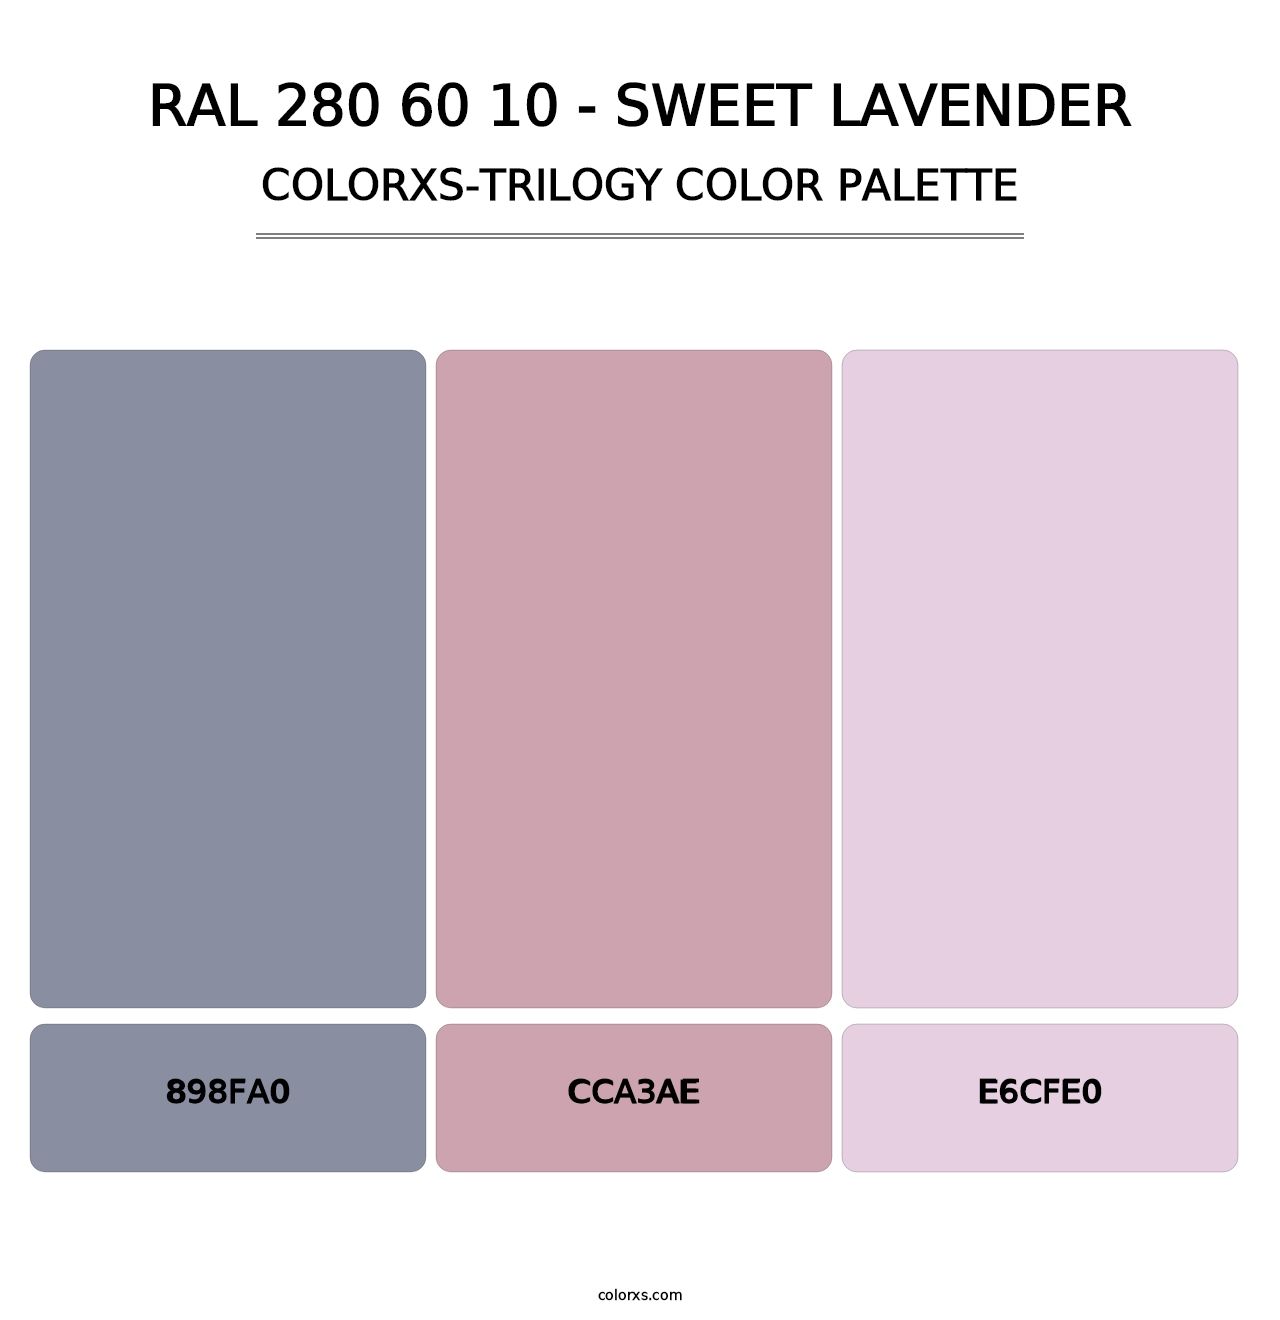 RAL 280 60 10 - Sweet Lavender - Colorxs Trilogy Palette